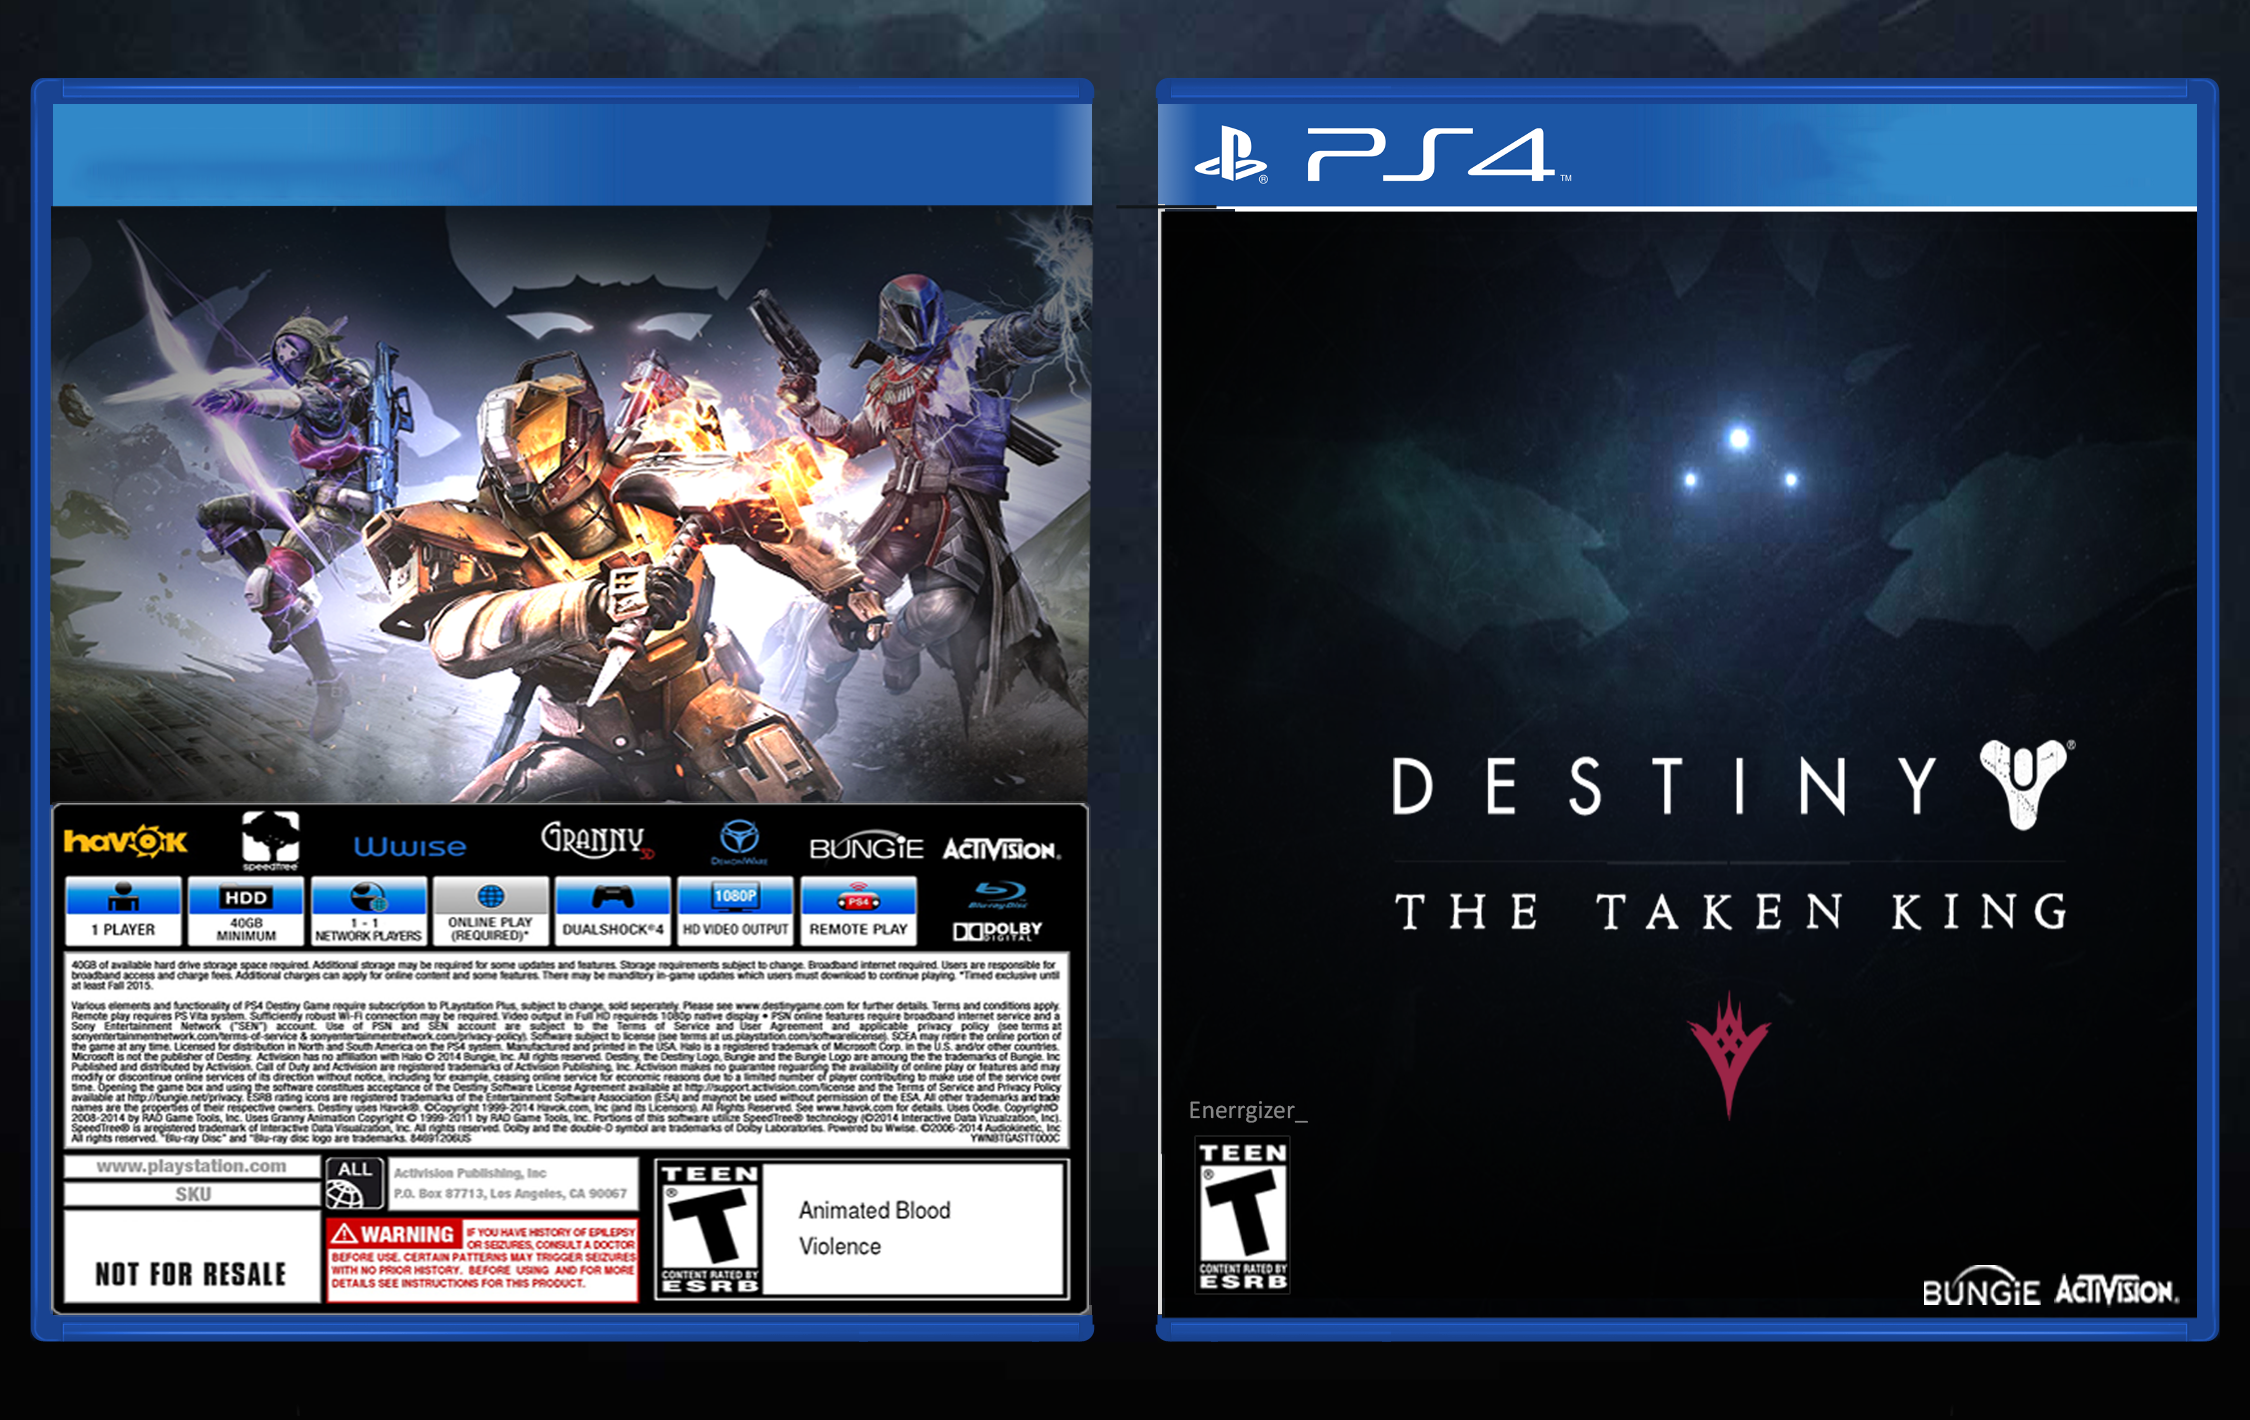 Destiny (PS4) The Taken King box cover